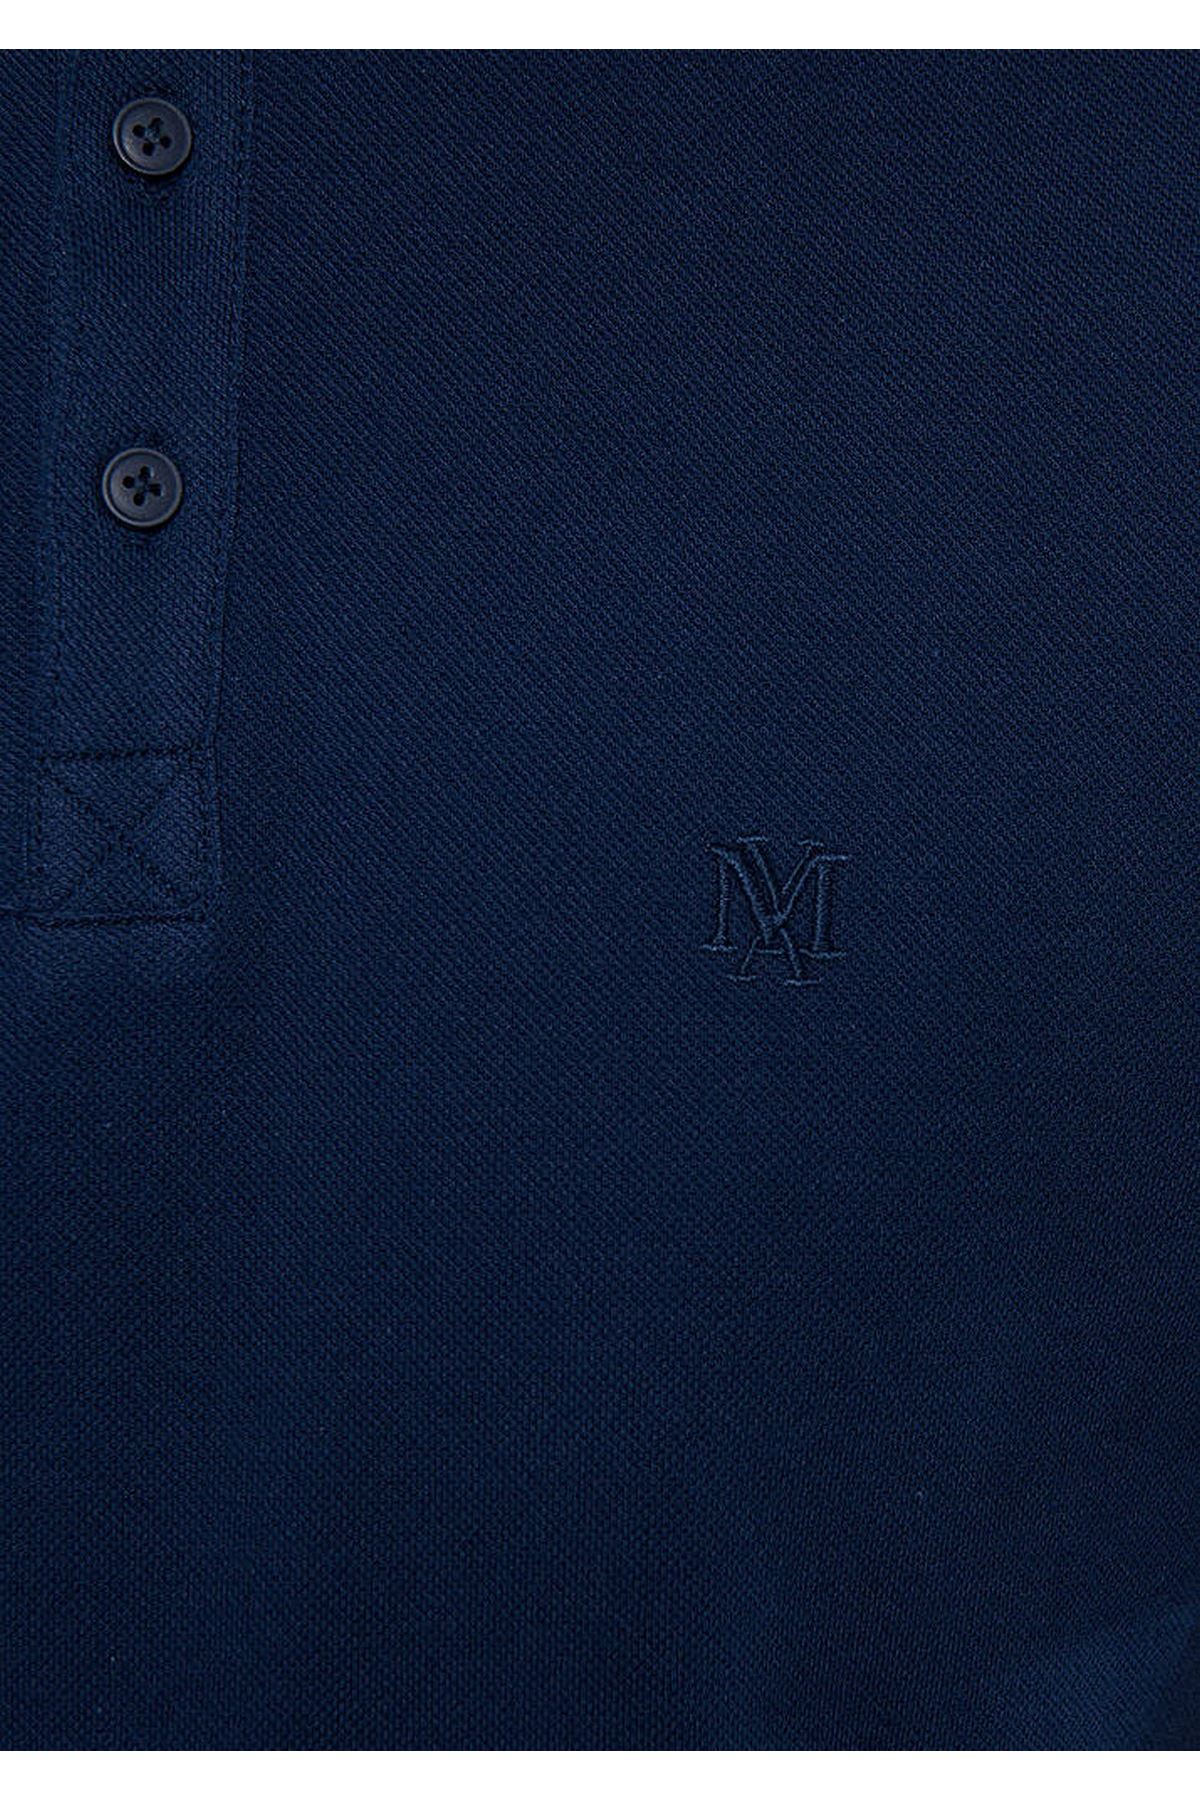 Polo Mavi Erkek Lacivert Tişört - M063247-28417